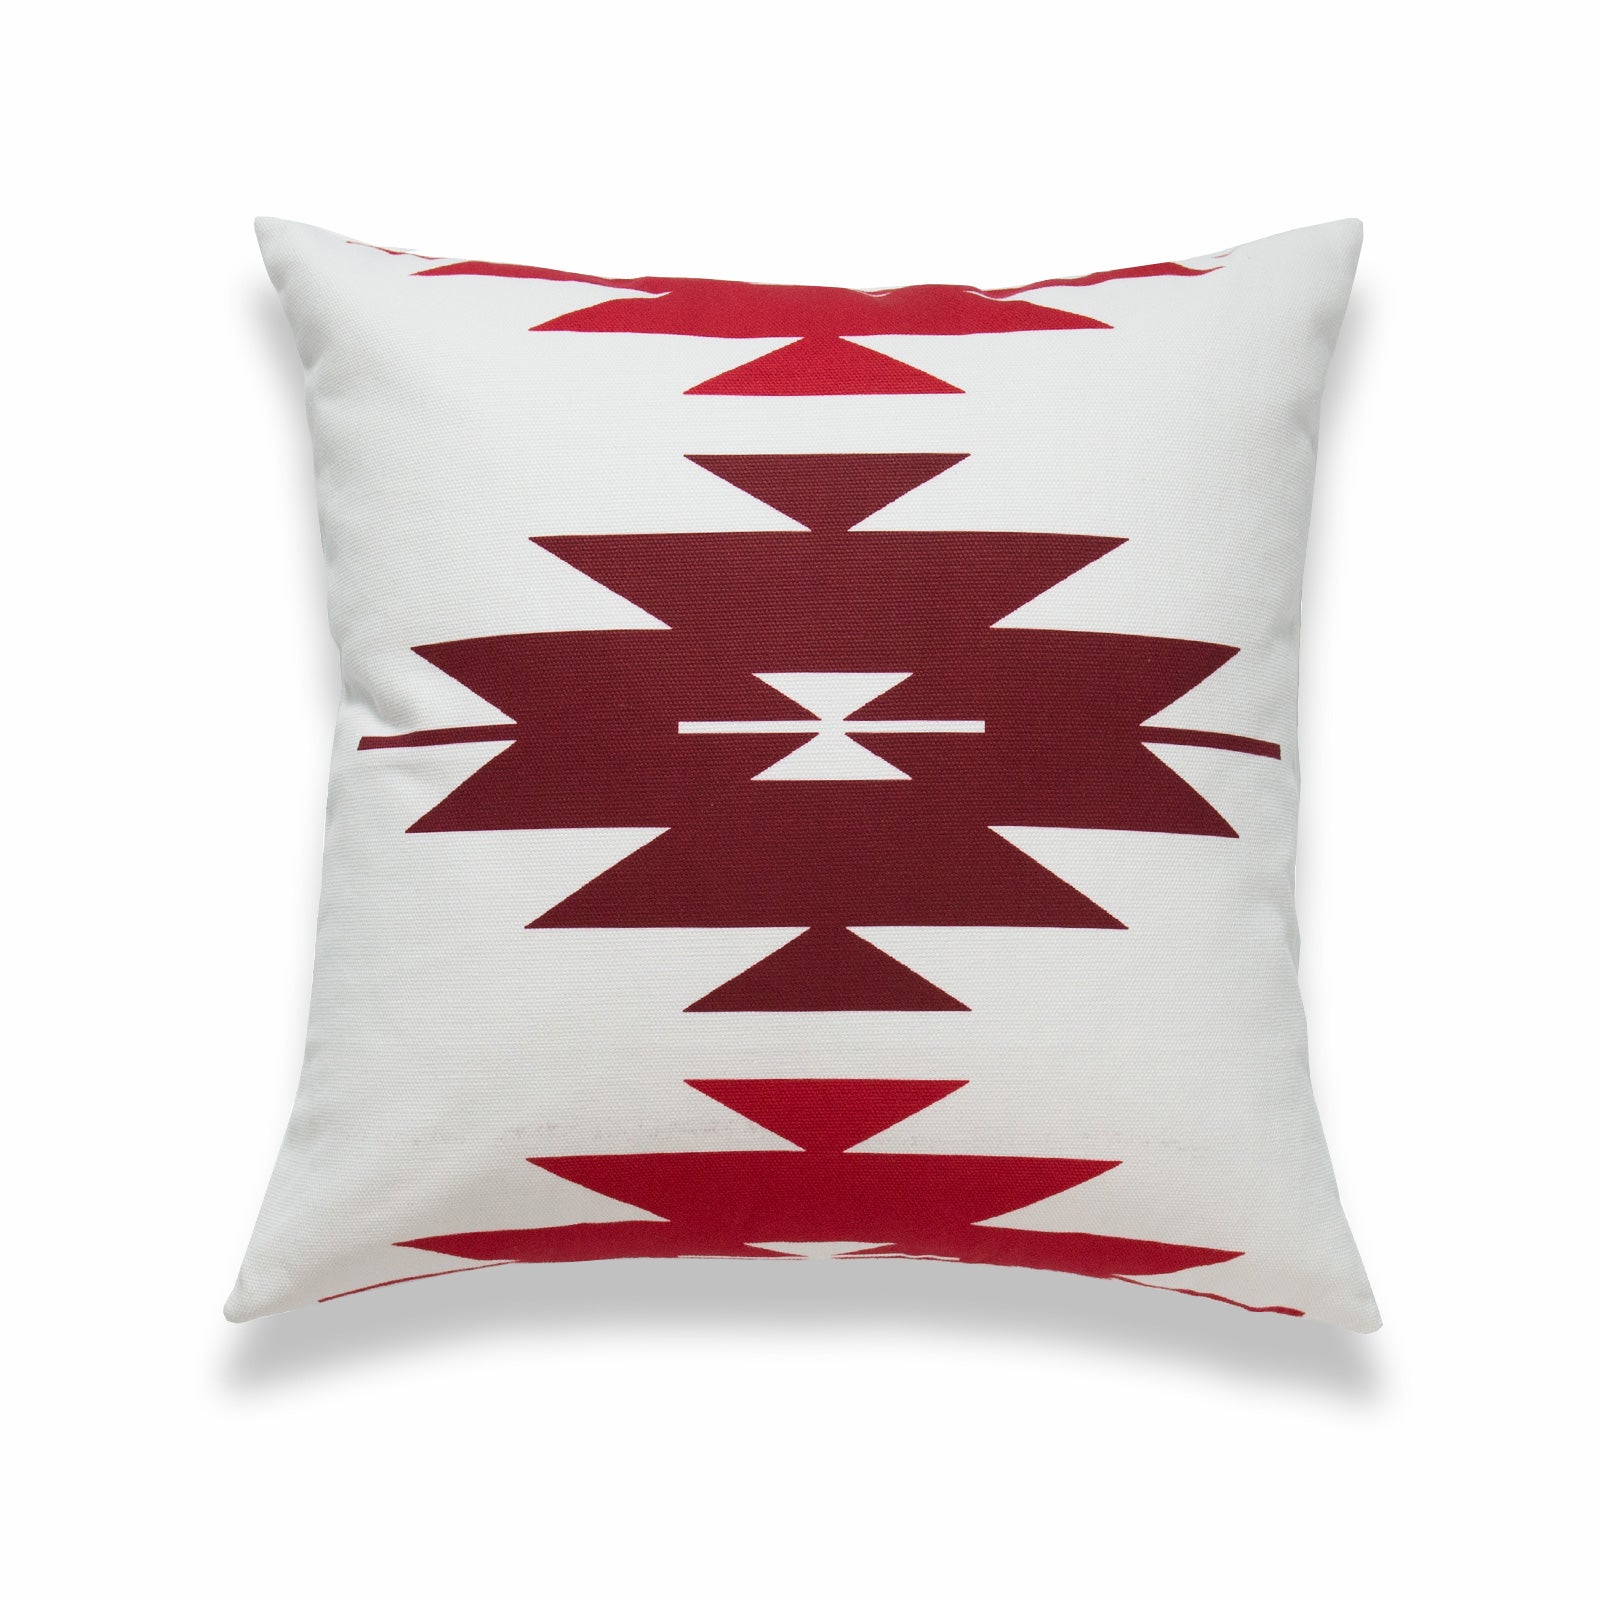 Aztec Print Pillow Cover, Diamond, Dark Red, 18"x18"